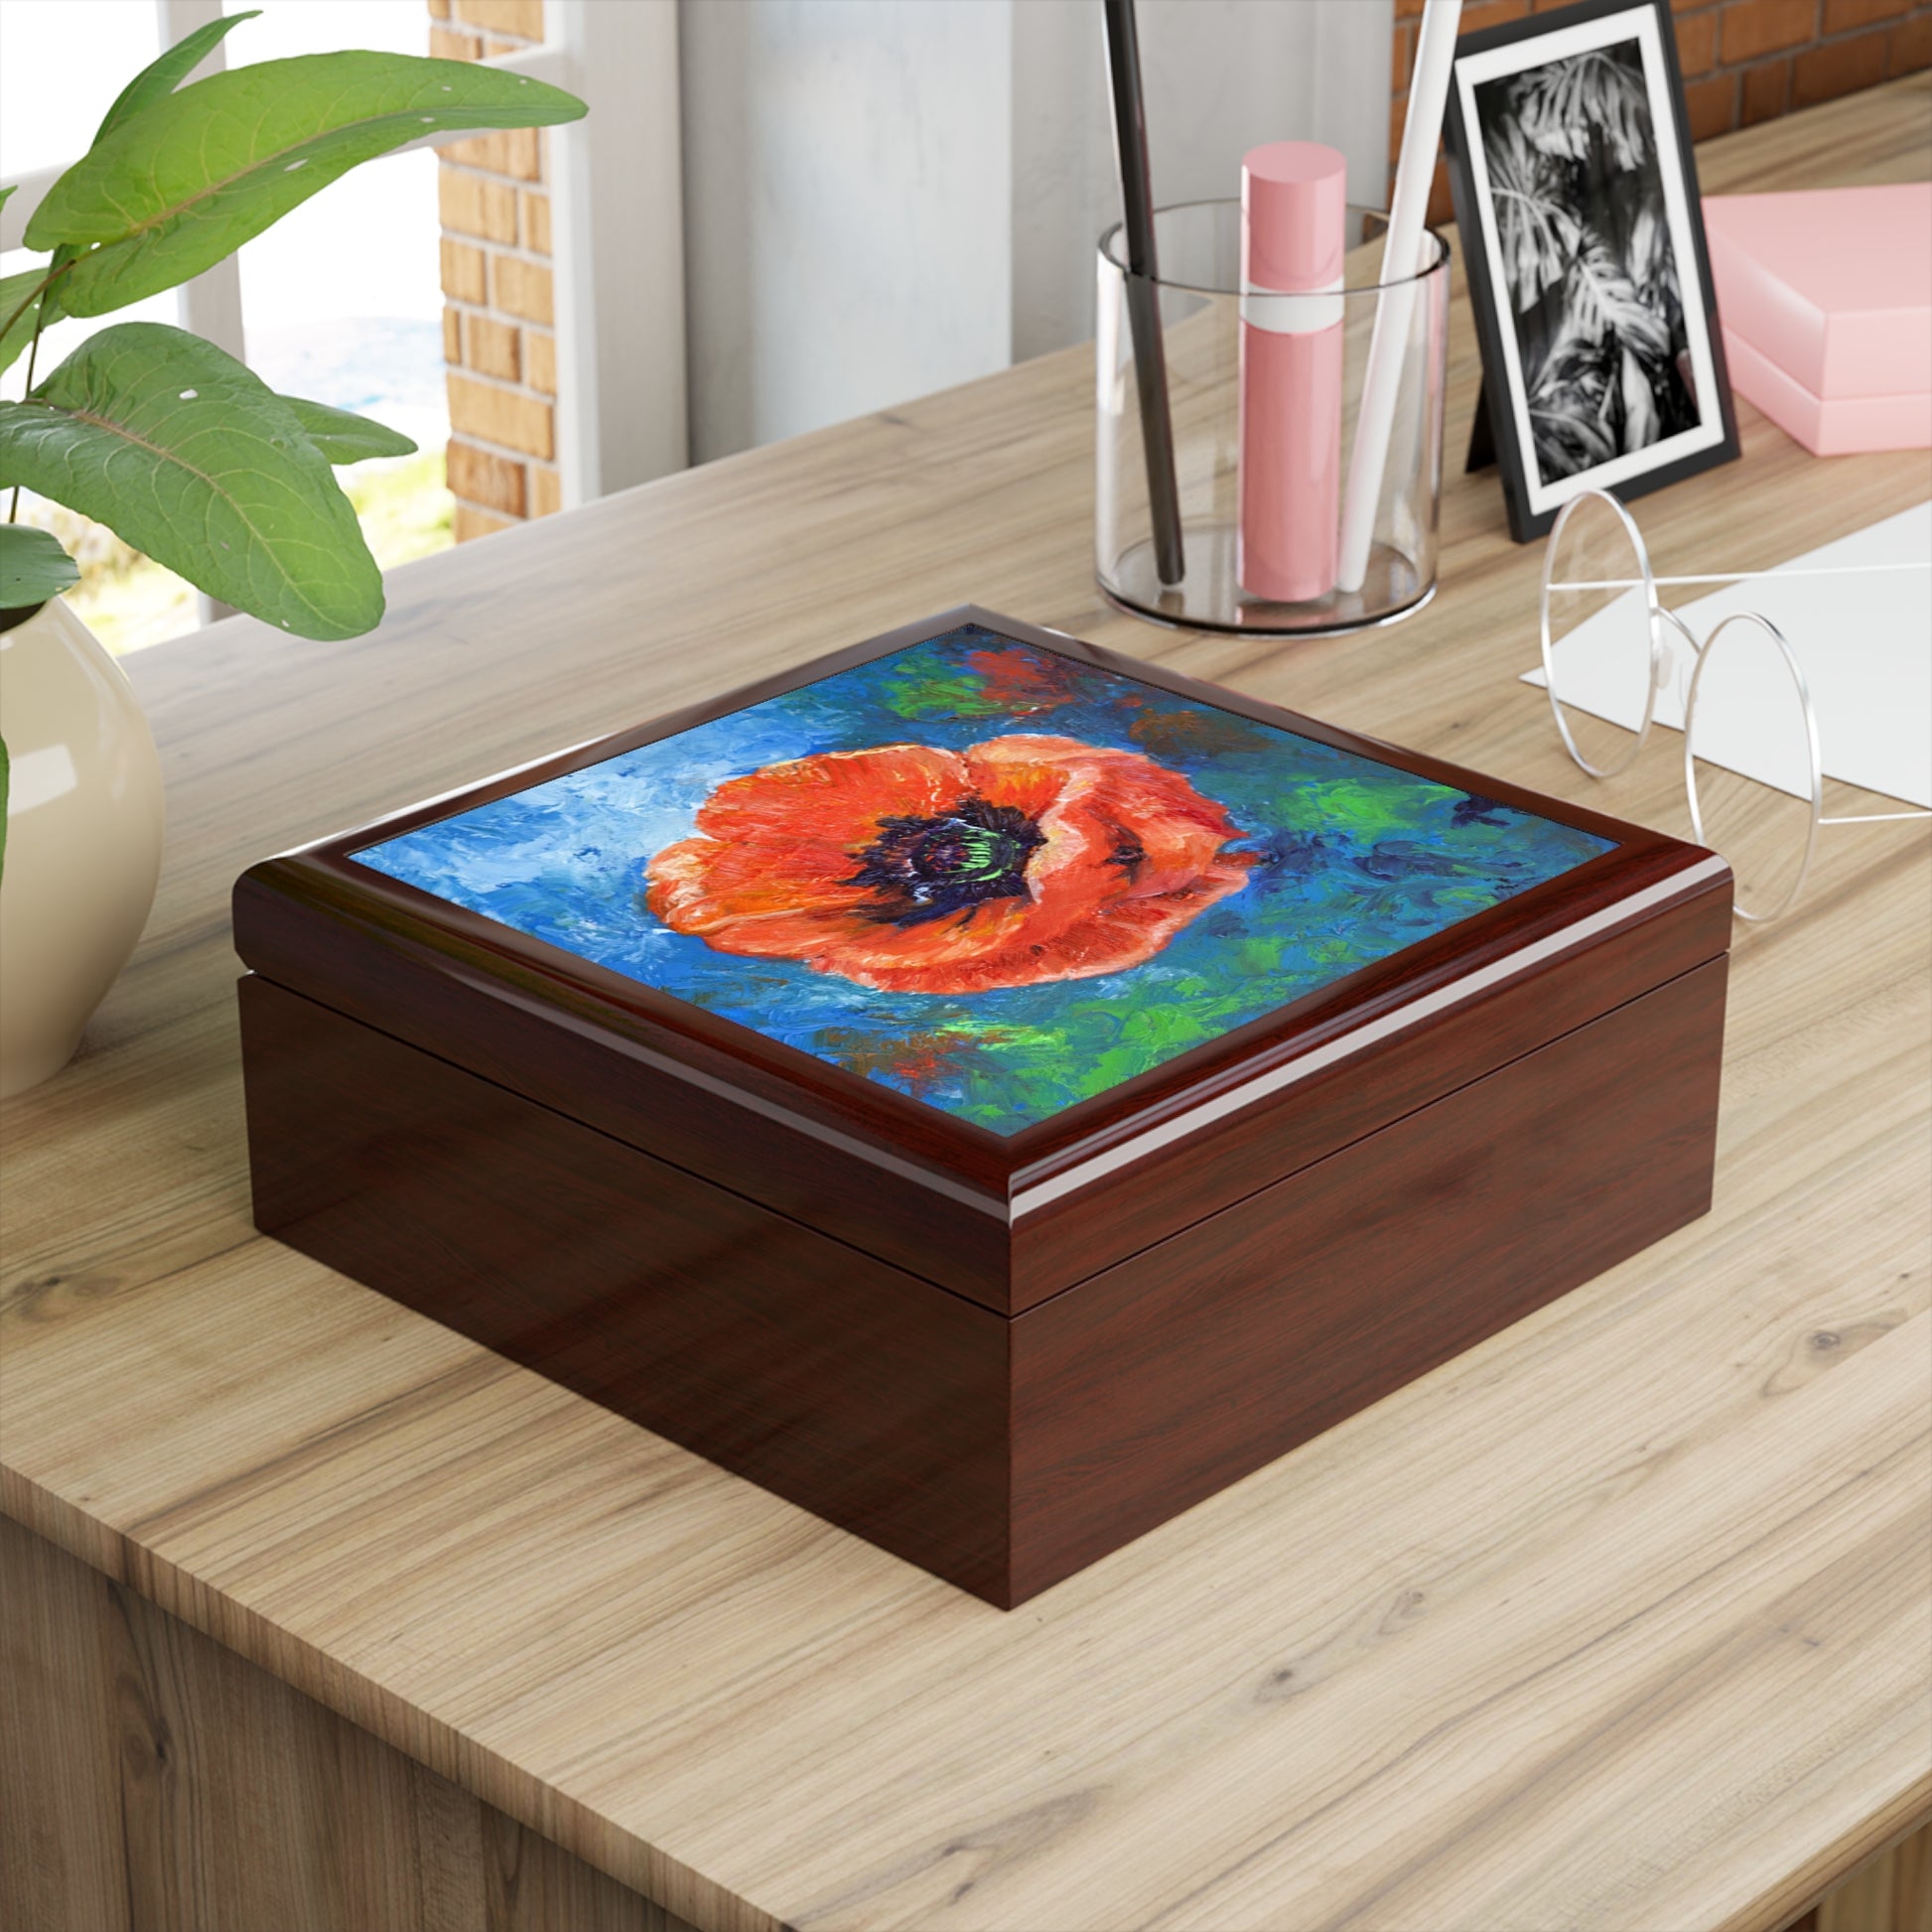 Keepsake/Jewelry Box - Poppy Flower Ceramic Tile Lid mahogany